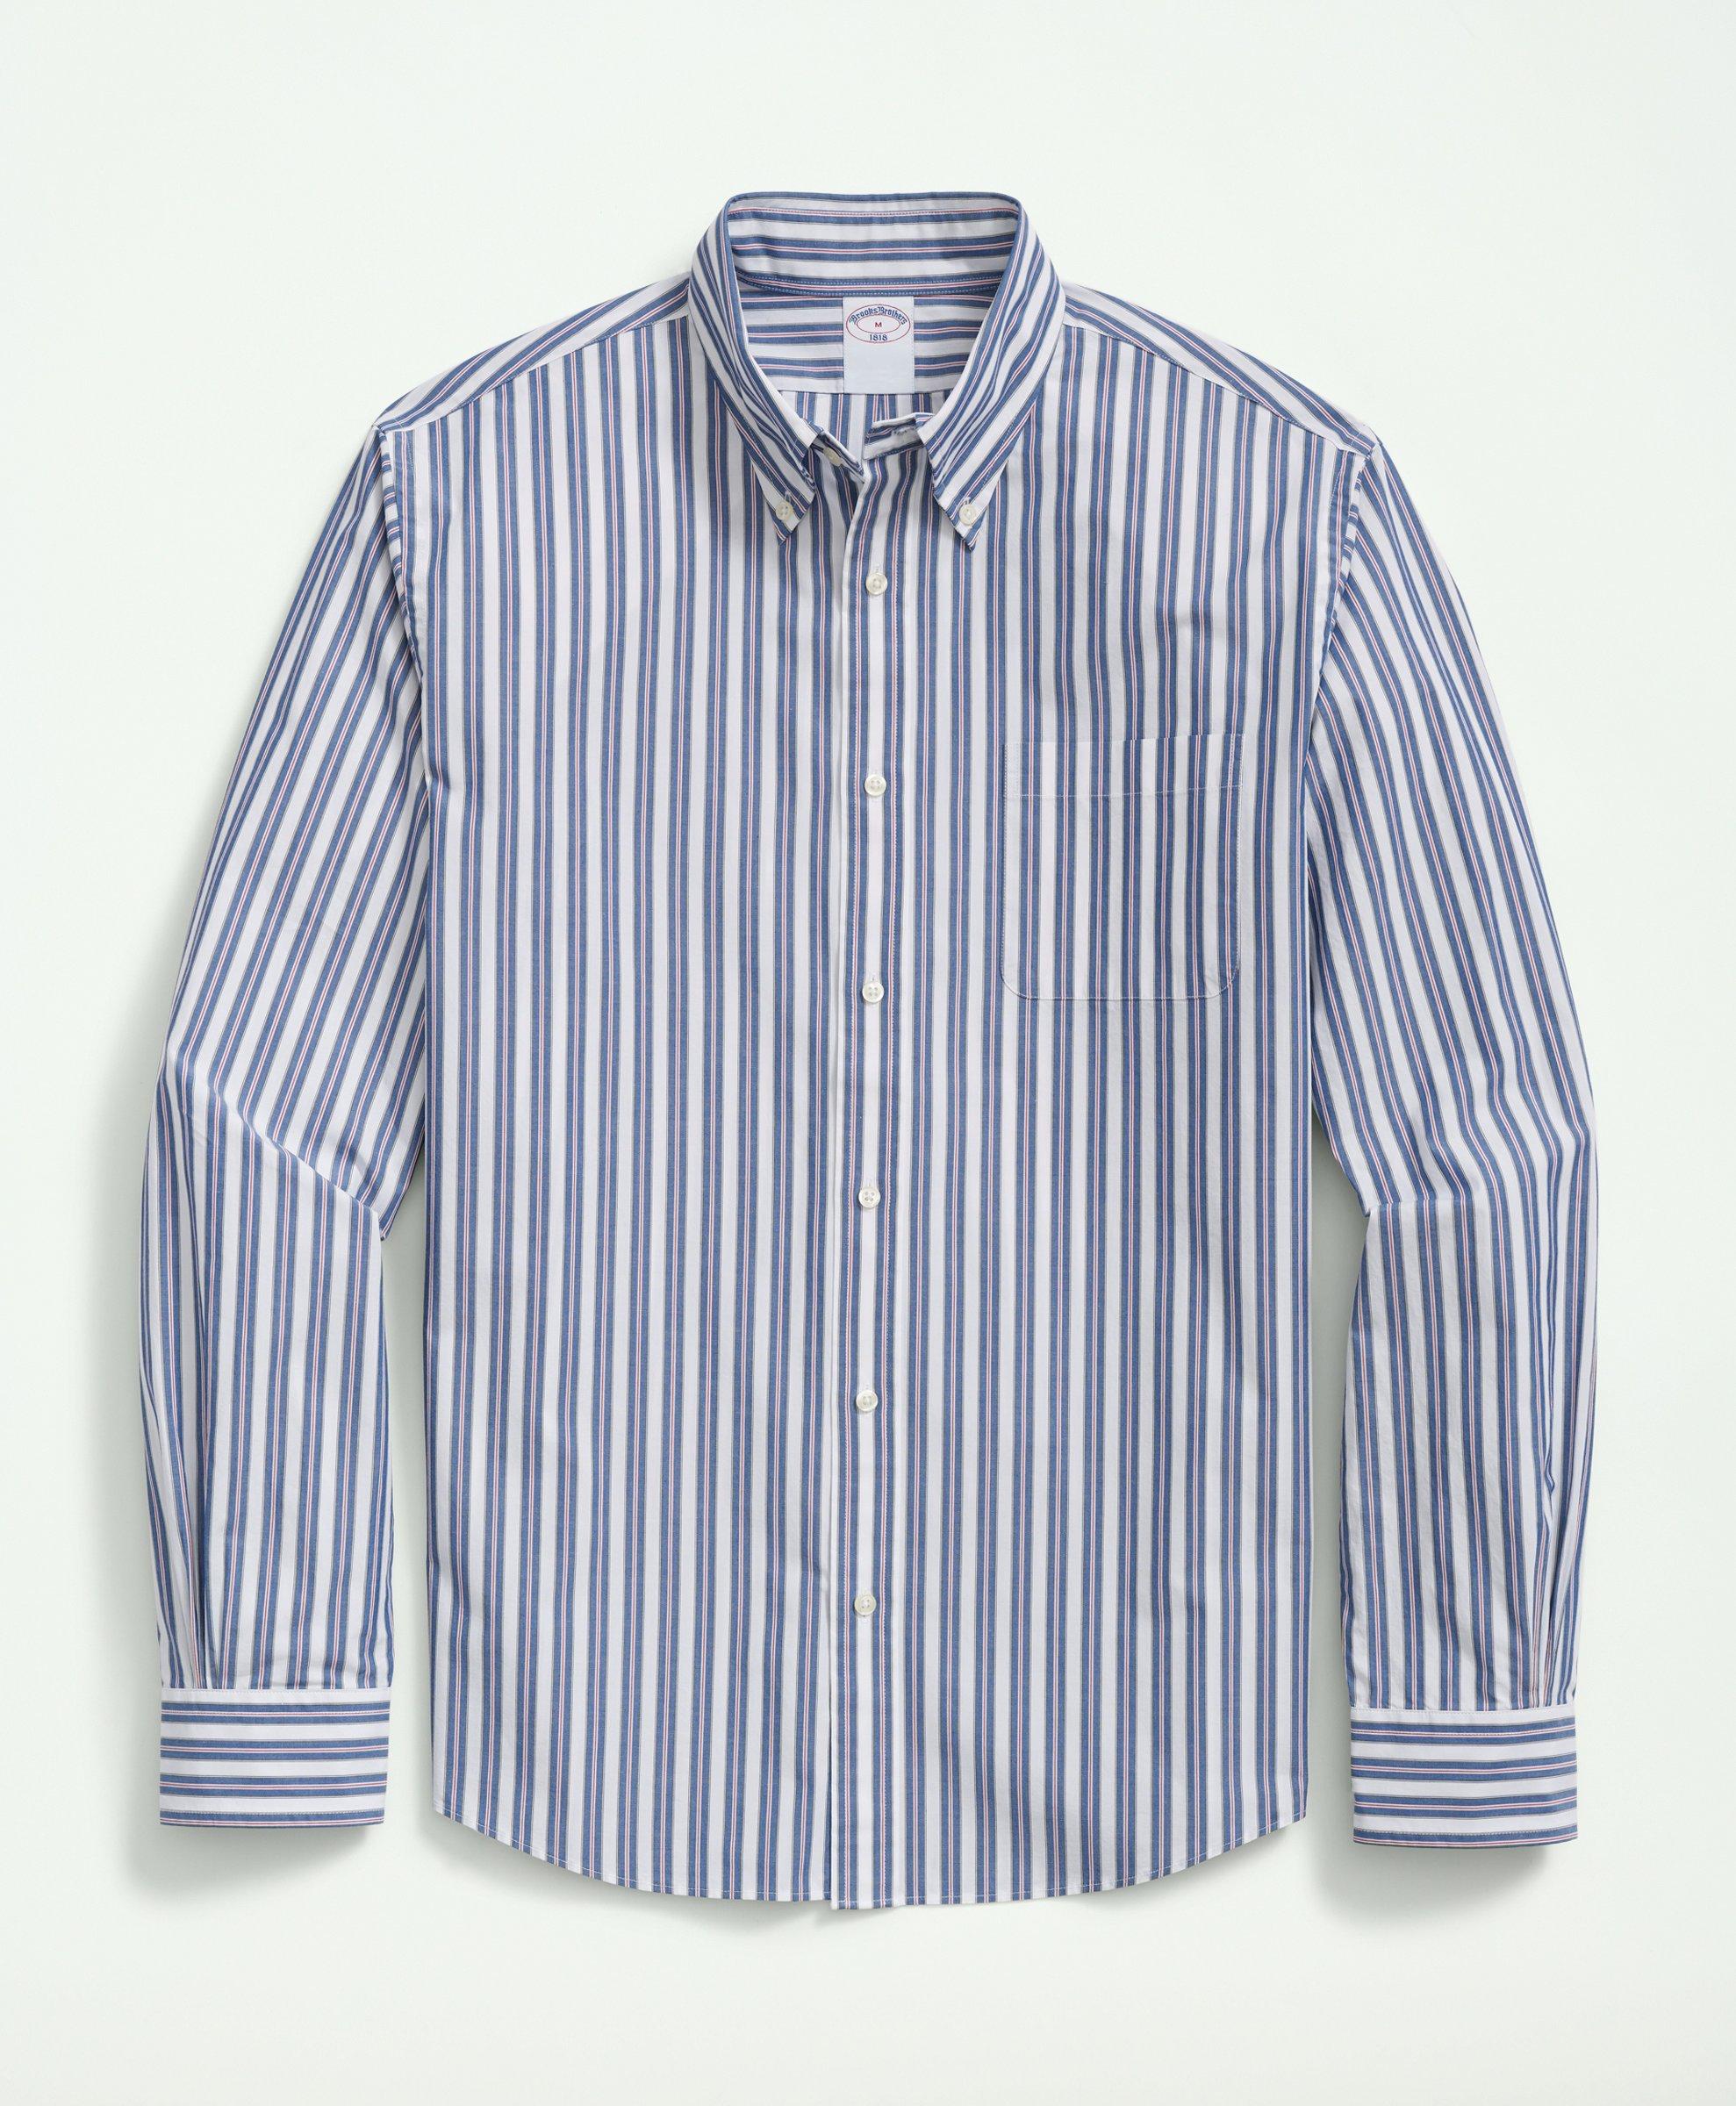 Friday Shirt, Poplin Multi-Striped